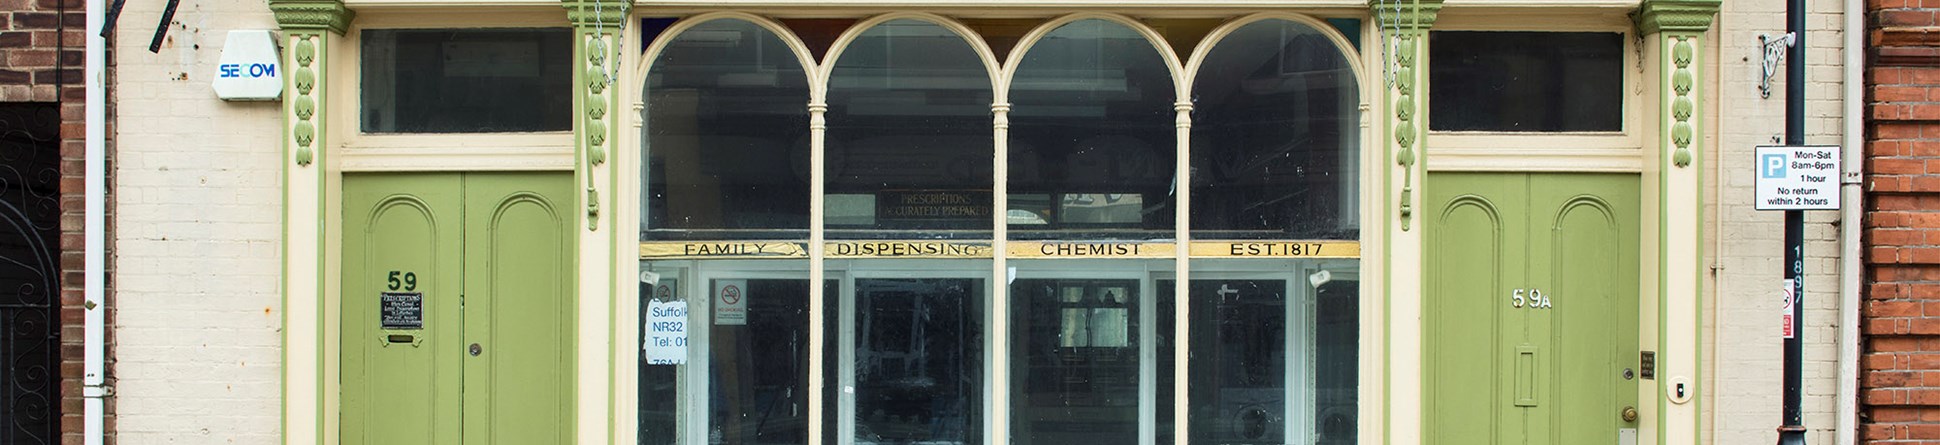 Front of former Chemist Shop, 59 - 59A High Street, Lowestoft, Suffolk